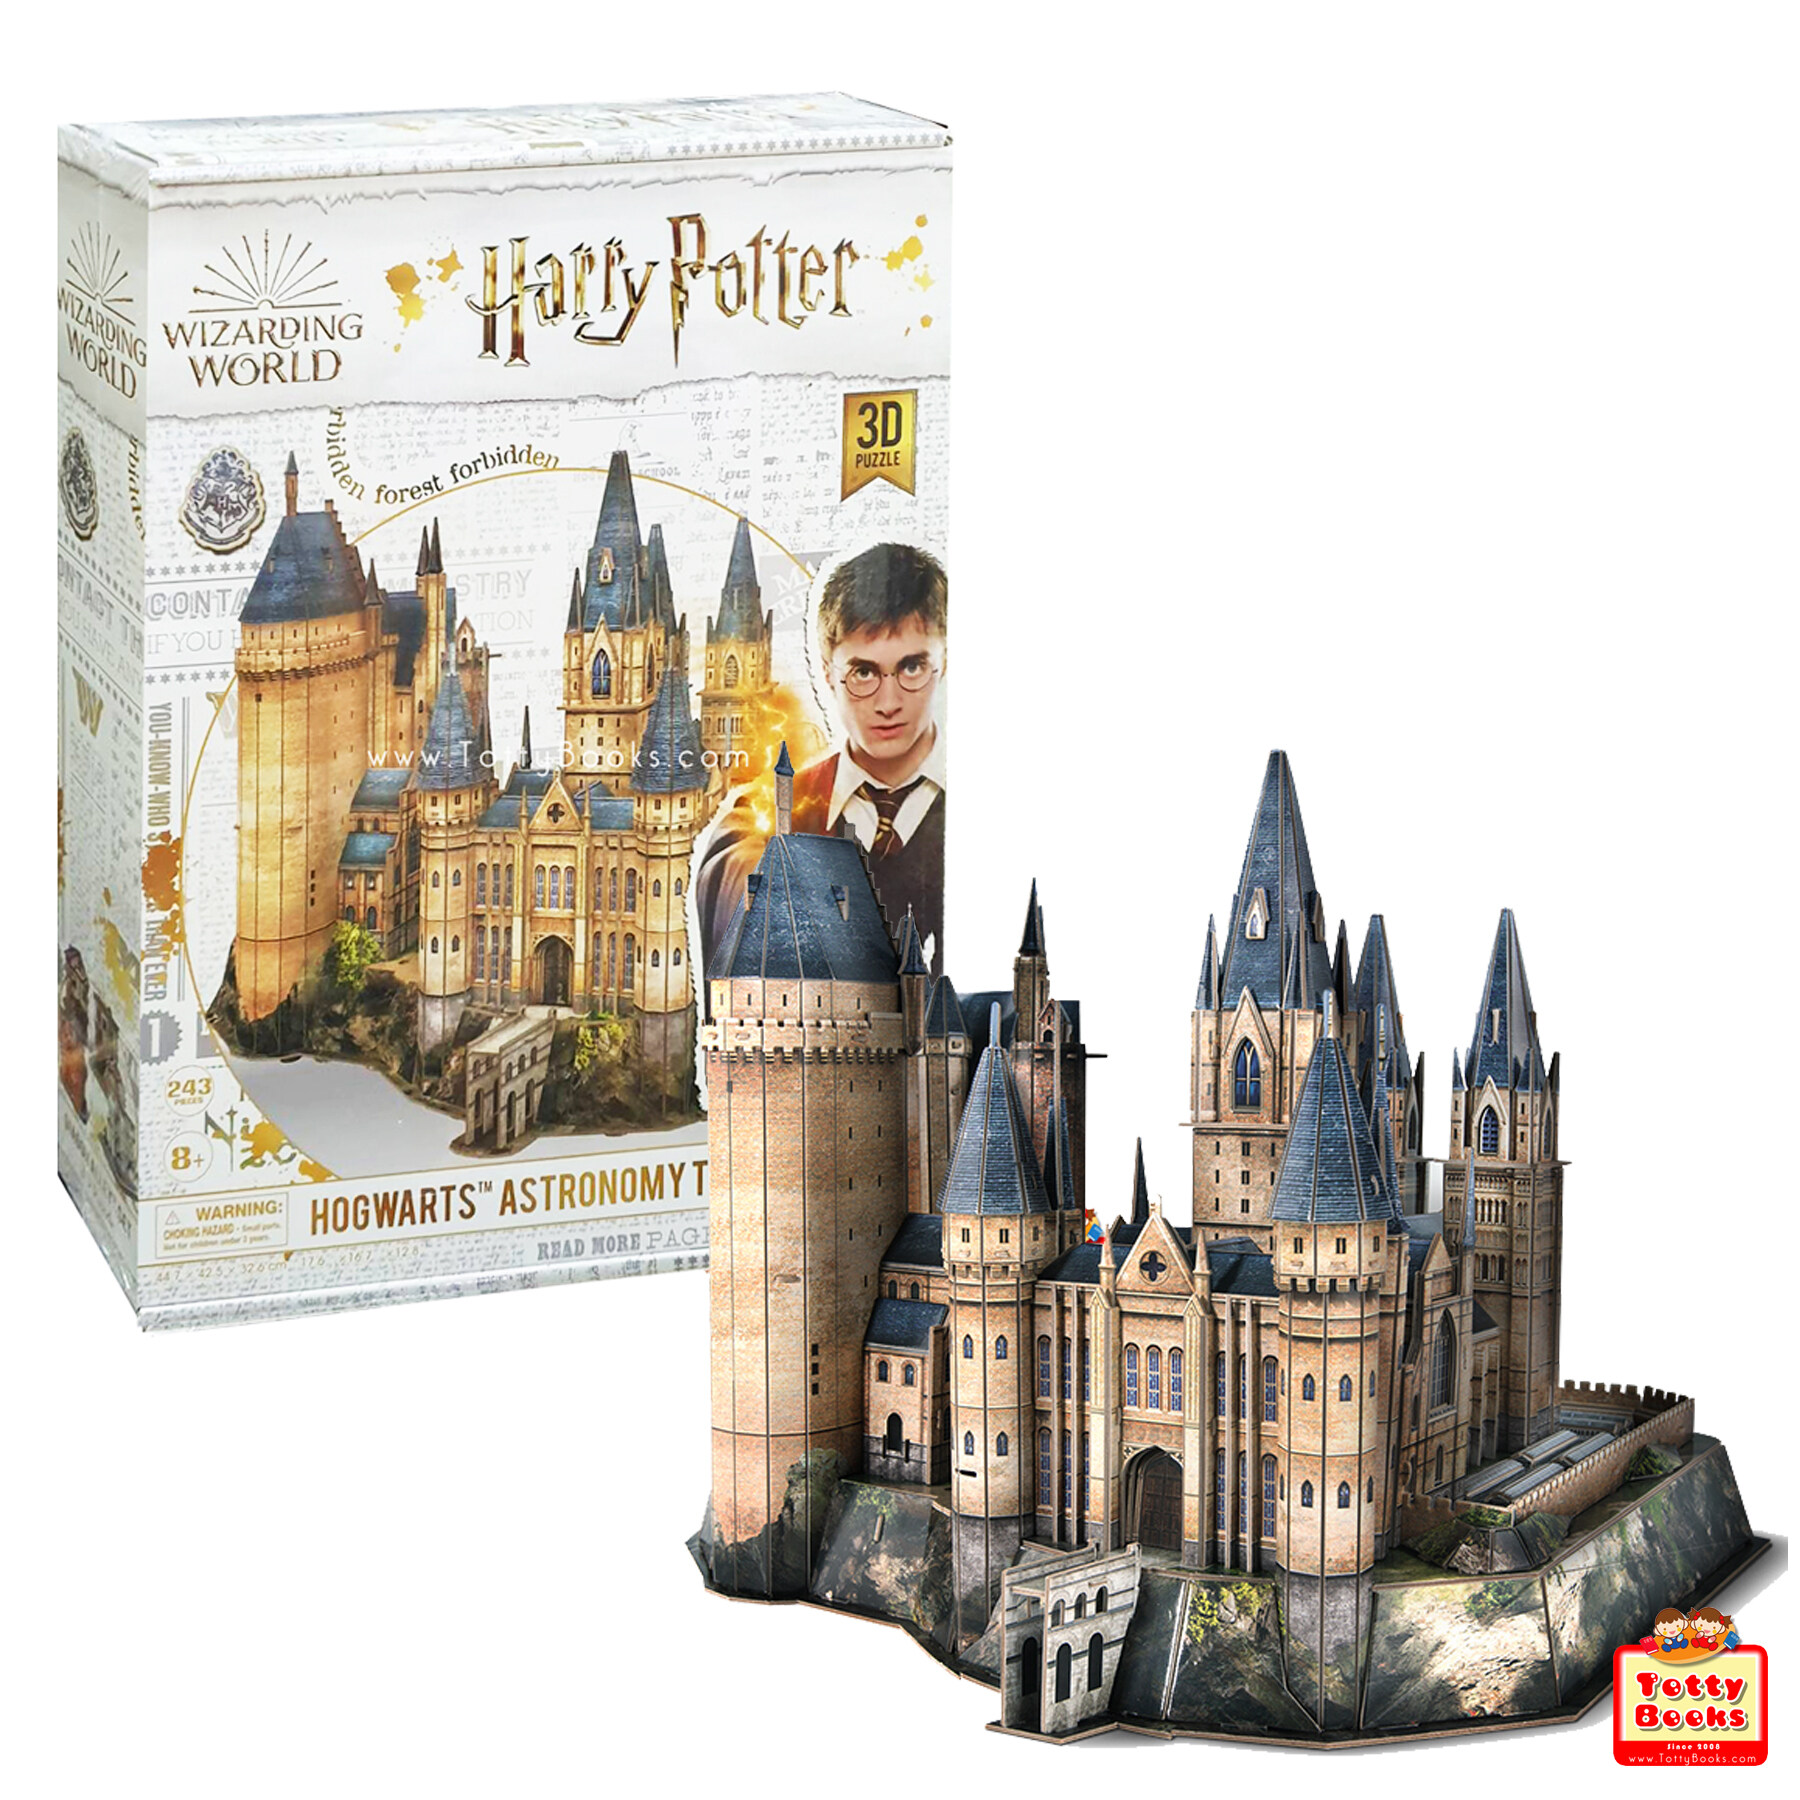 Totty Books (8 ขวบ - ผู้ใหญ่) ประกอบโมเดลจำลองฮอกวอตส์ แฮรี่พอตเตอร์ Harry Potter Hogwarts Astronomy Tower 3D Puzzle